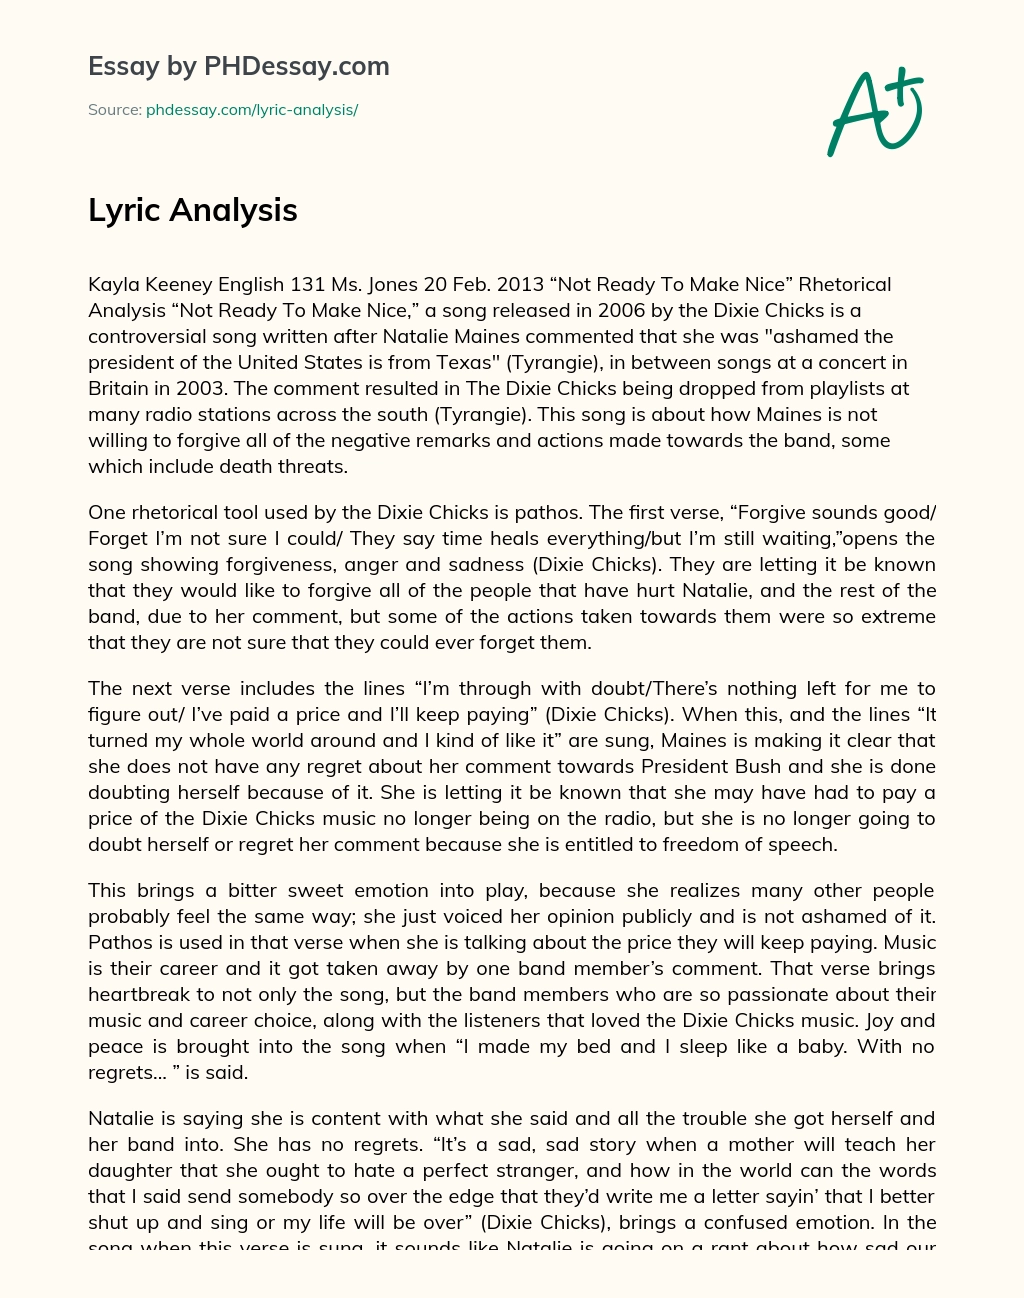 Lyric Analysis essay